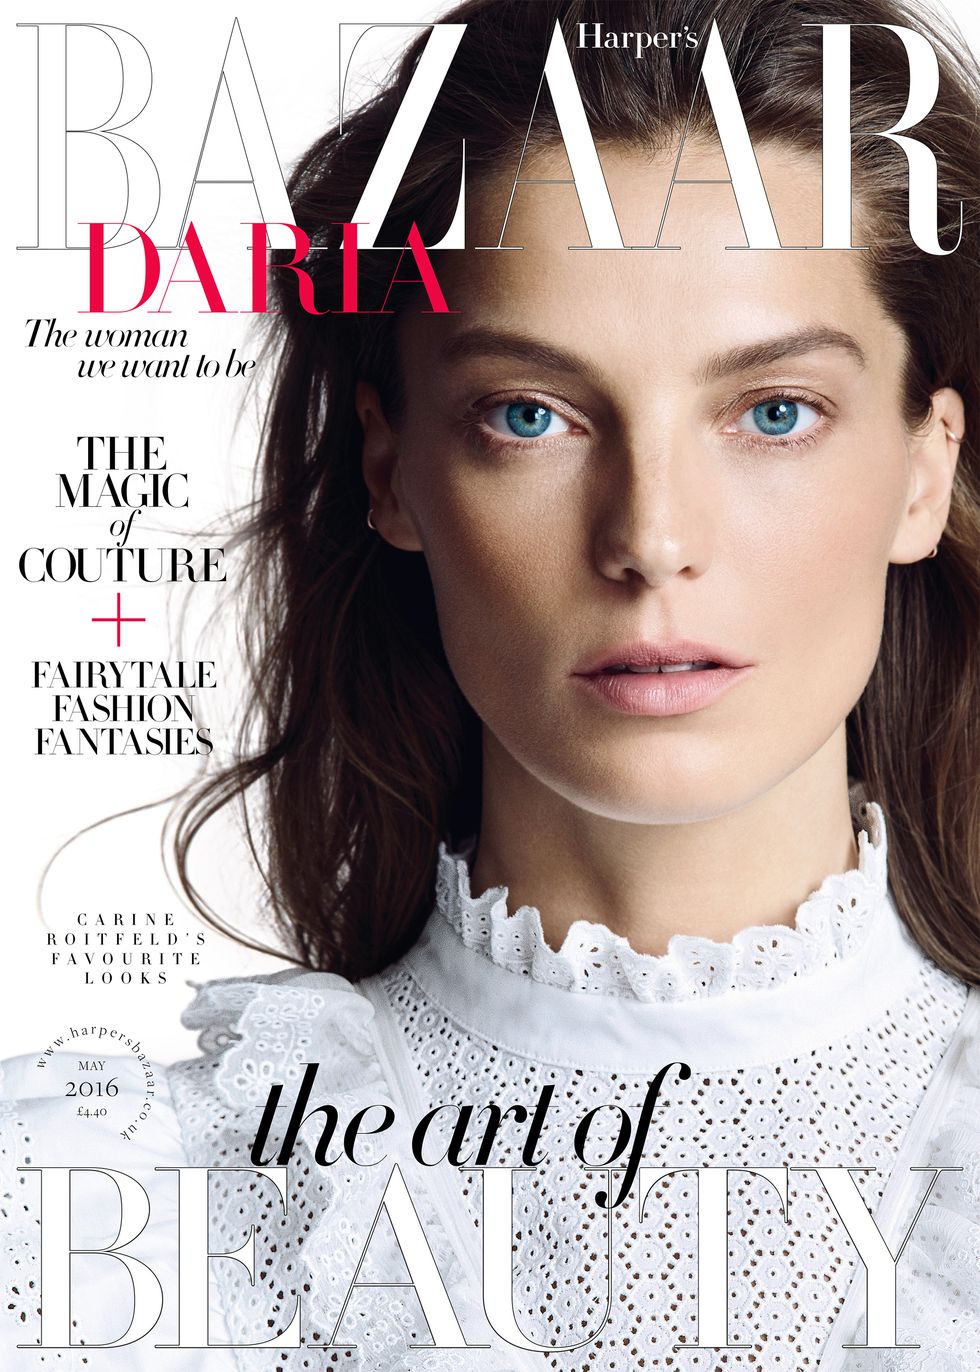 Daria Werbowy May 2016 issue cover of Harper's Bazaar